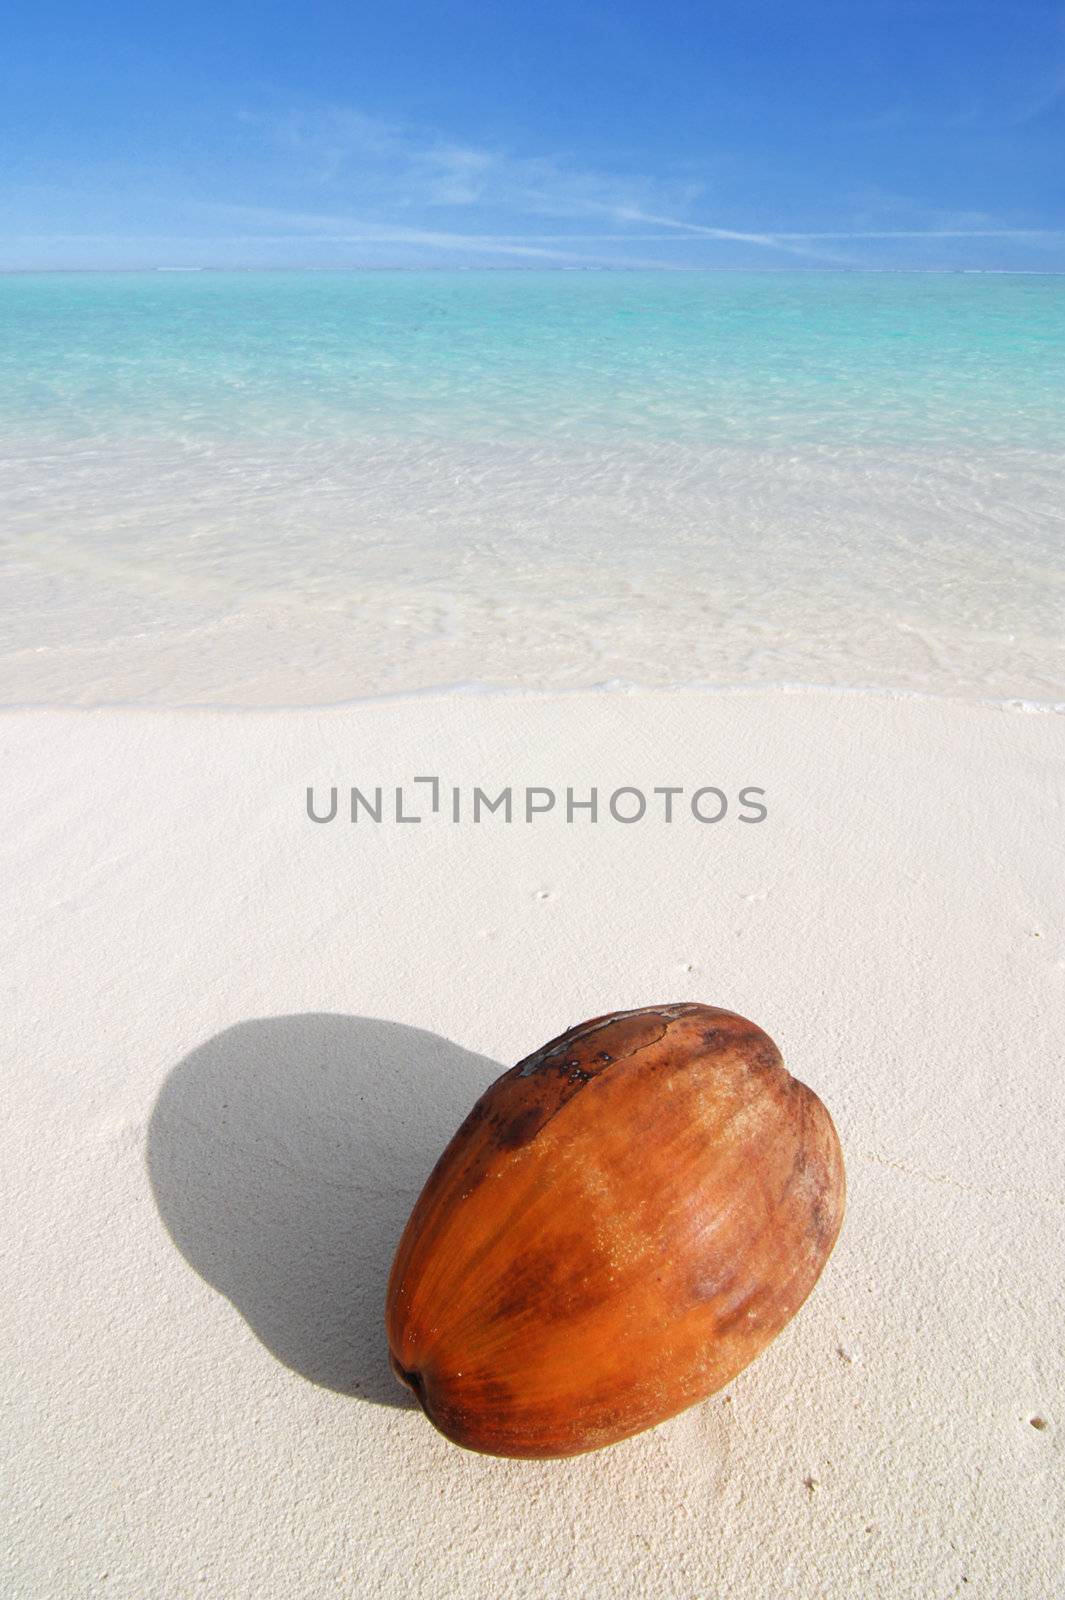 Coconut lying on the beautiful beach near turquoise sea